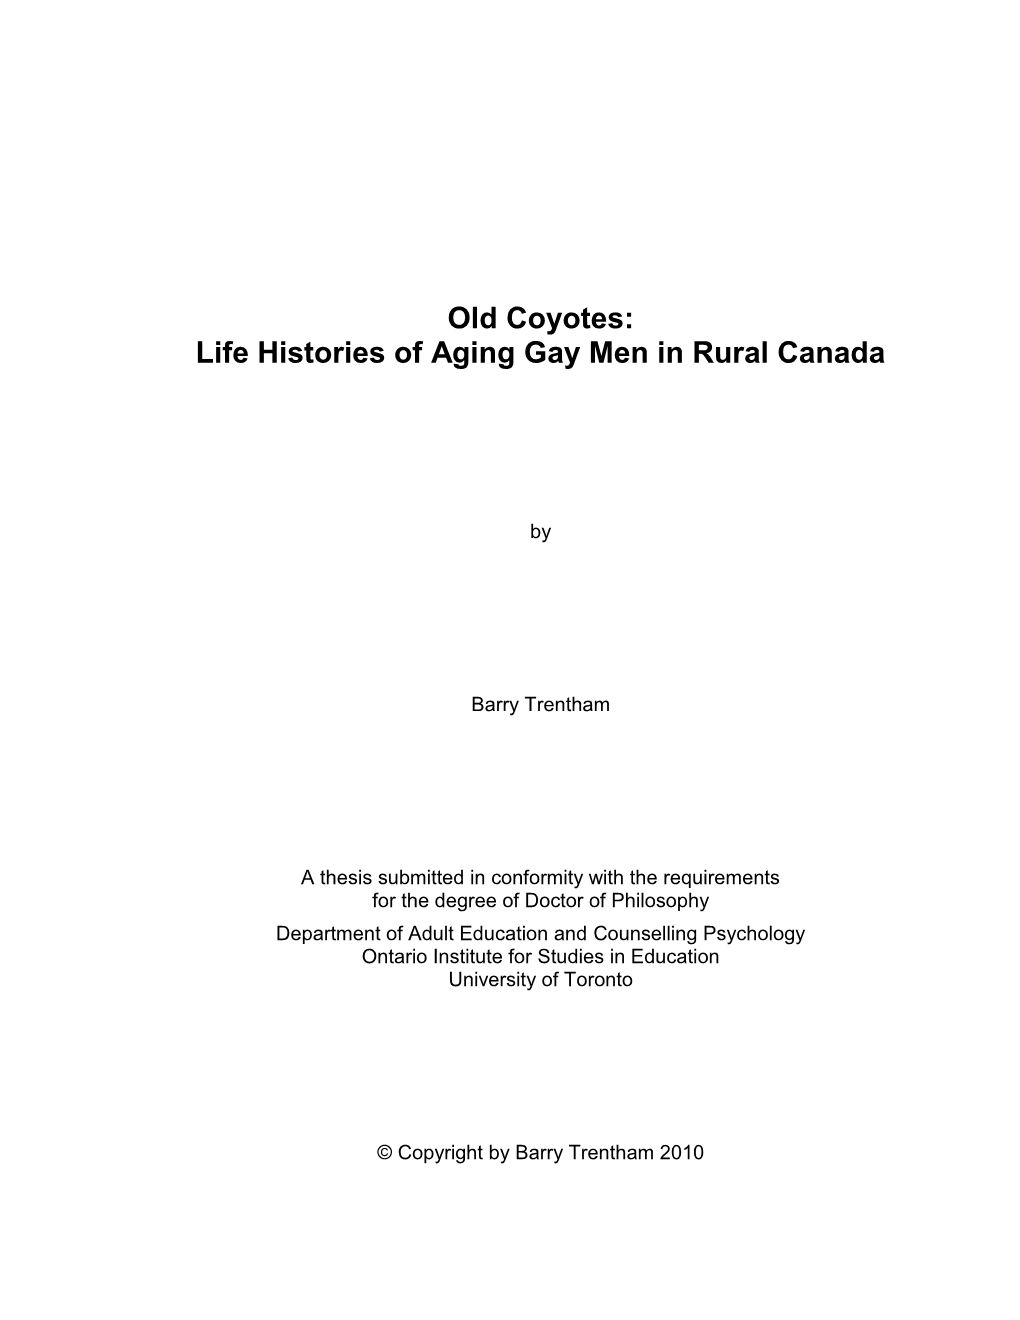 Life Histories of Aging Gay Men in Rural Canada